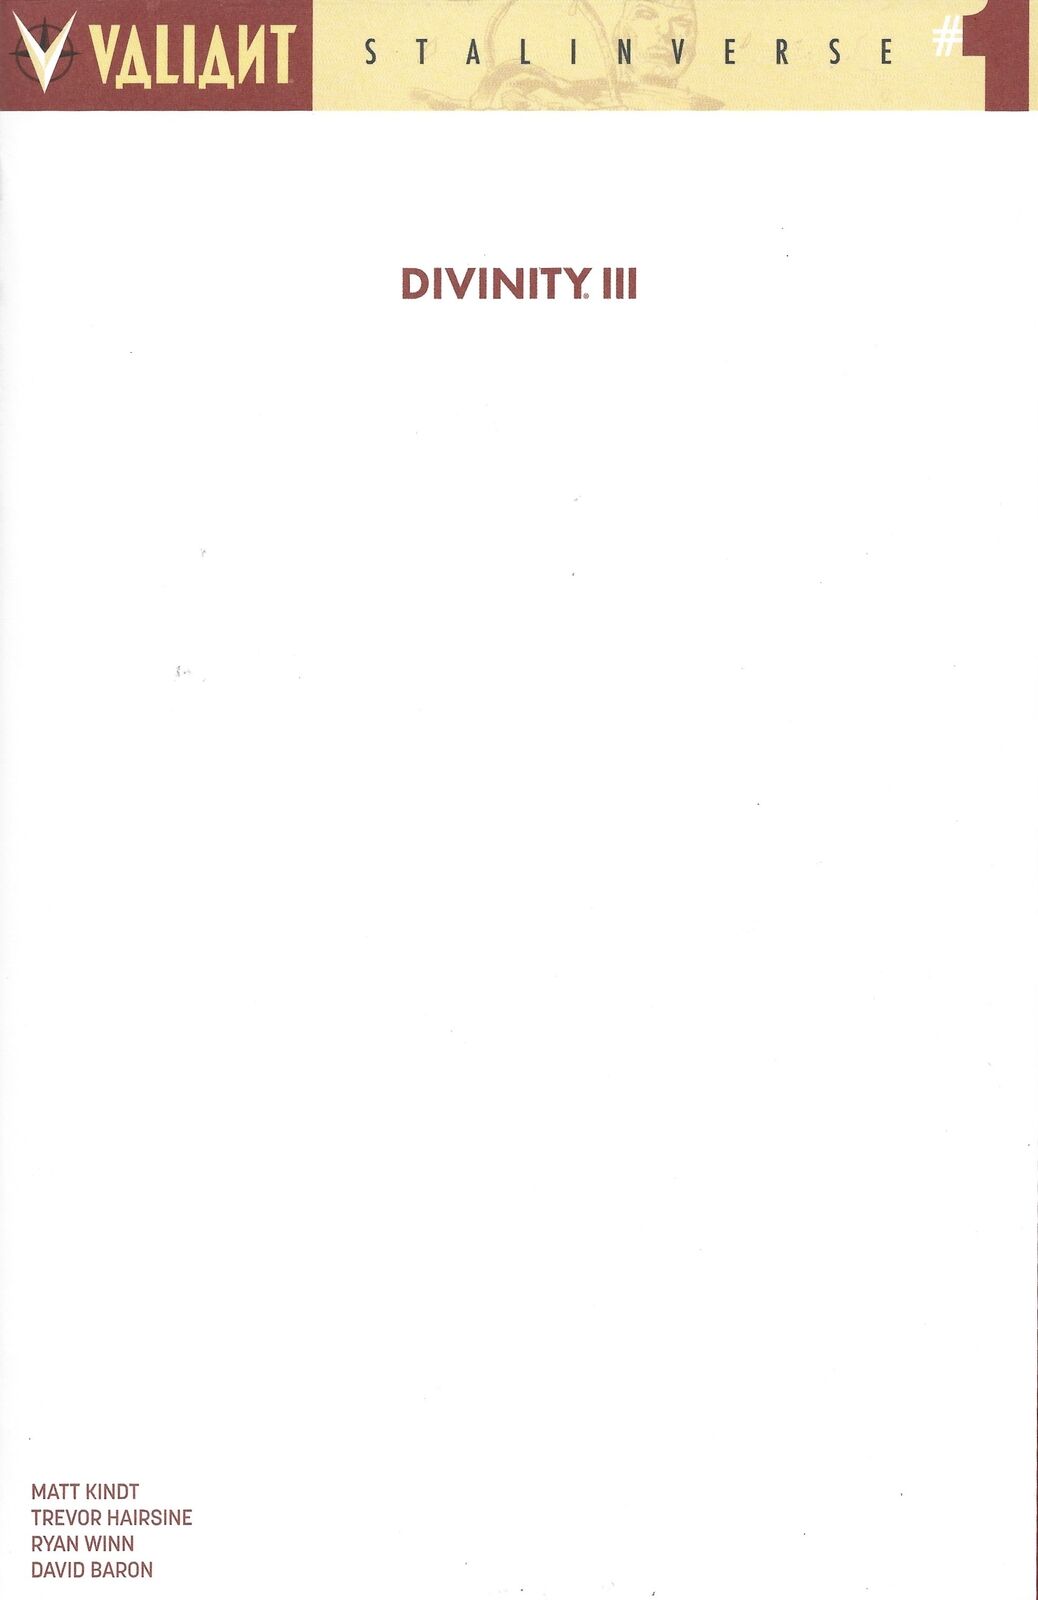 DIVINITY III STALINVERSE #1 CVR C BLANK CVR